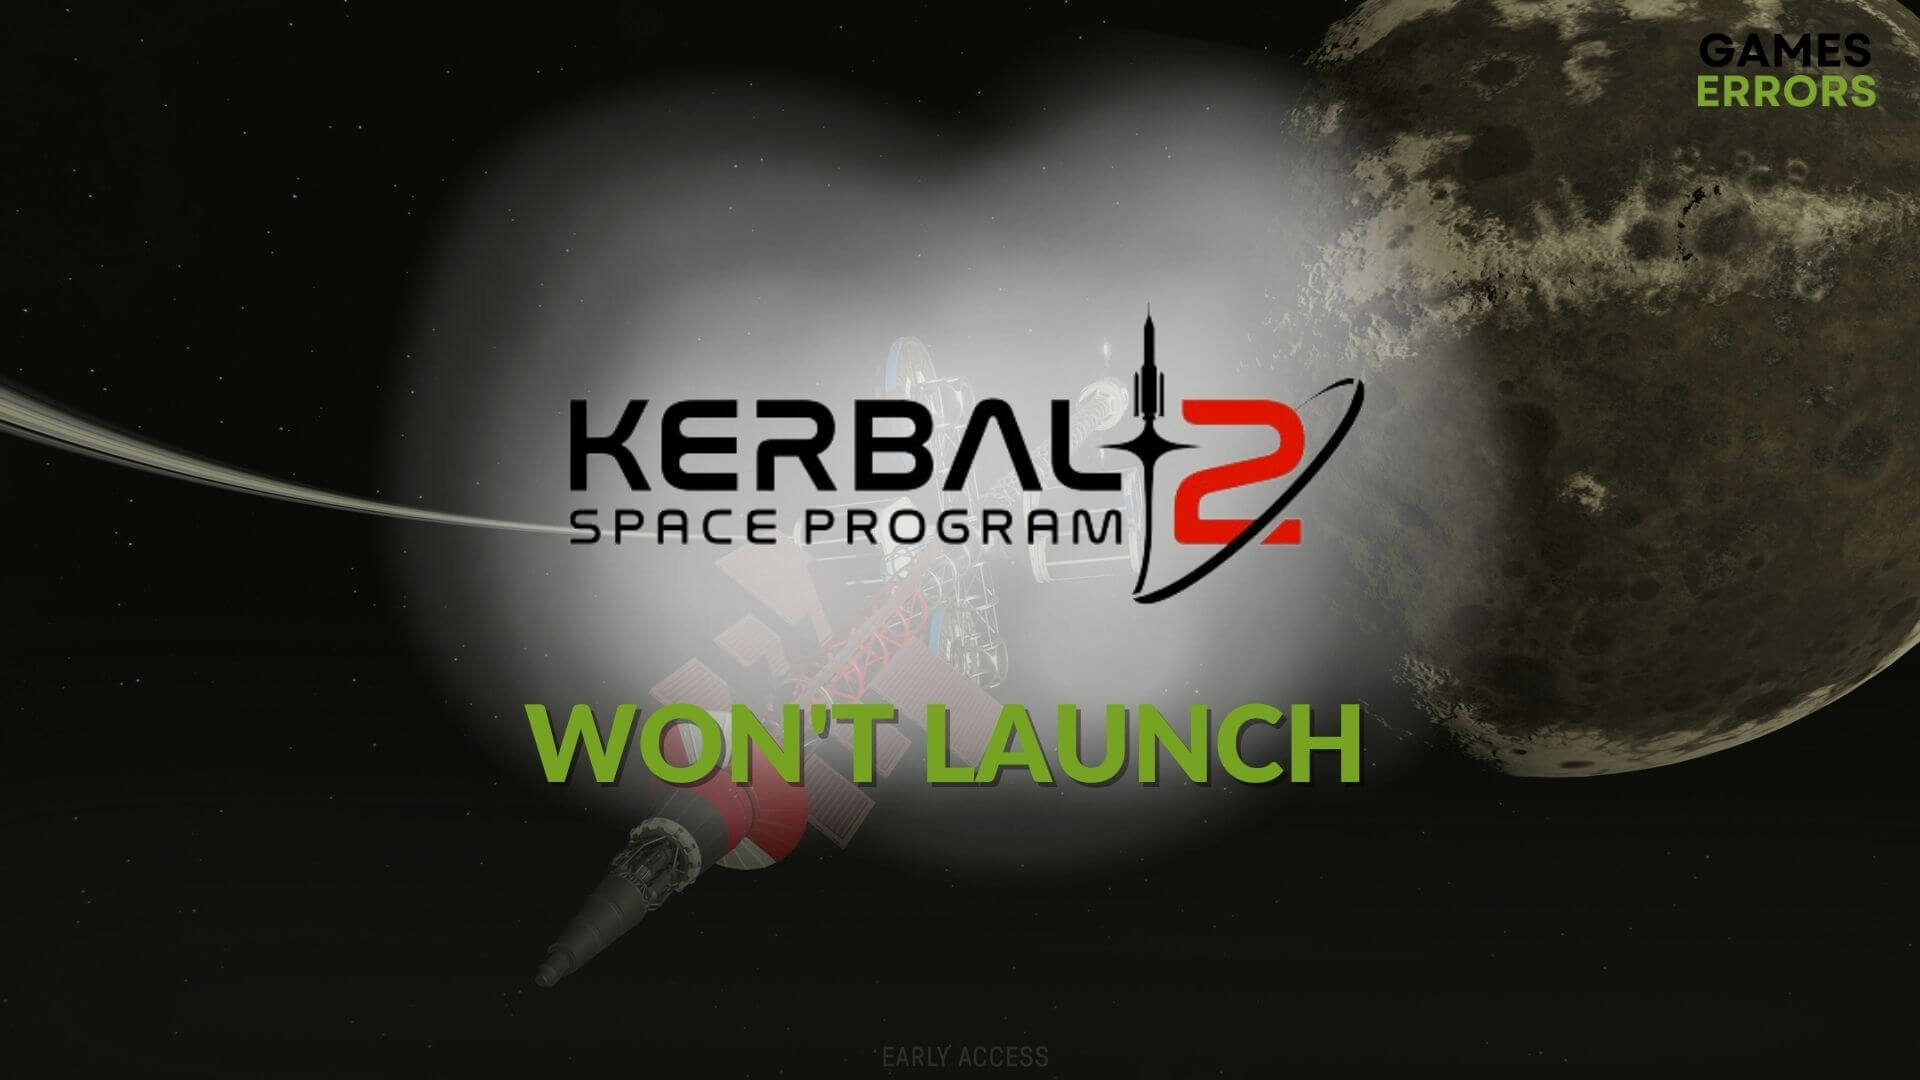 Fix kerbal space program 2 won't launch